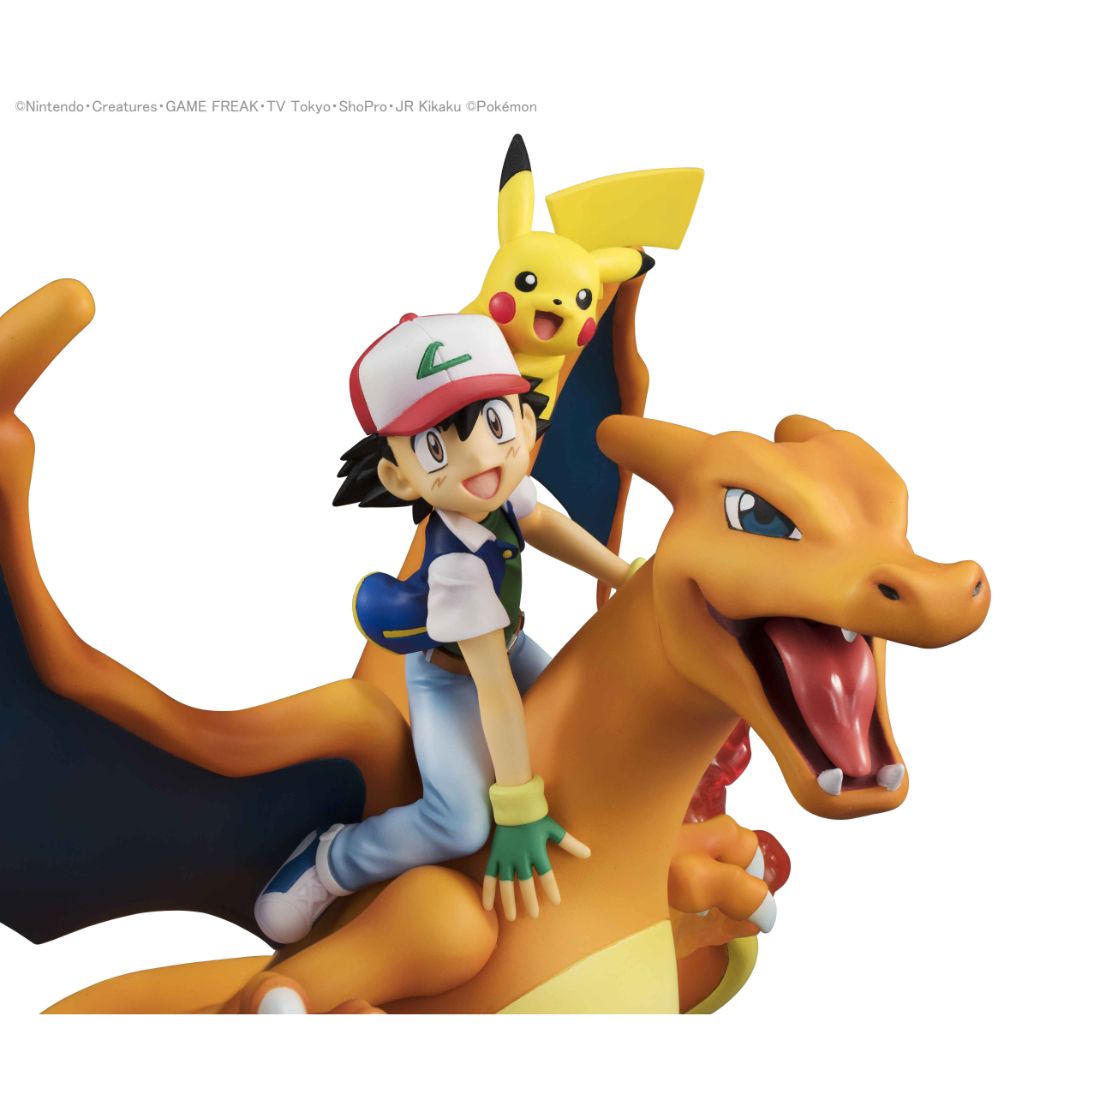 New POKEMON Ash & Pikachu Minifigures on Mercari